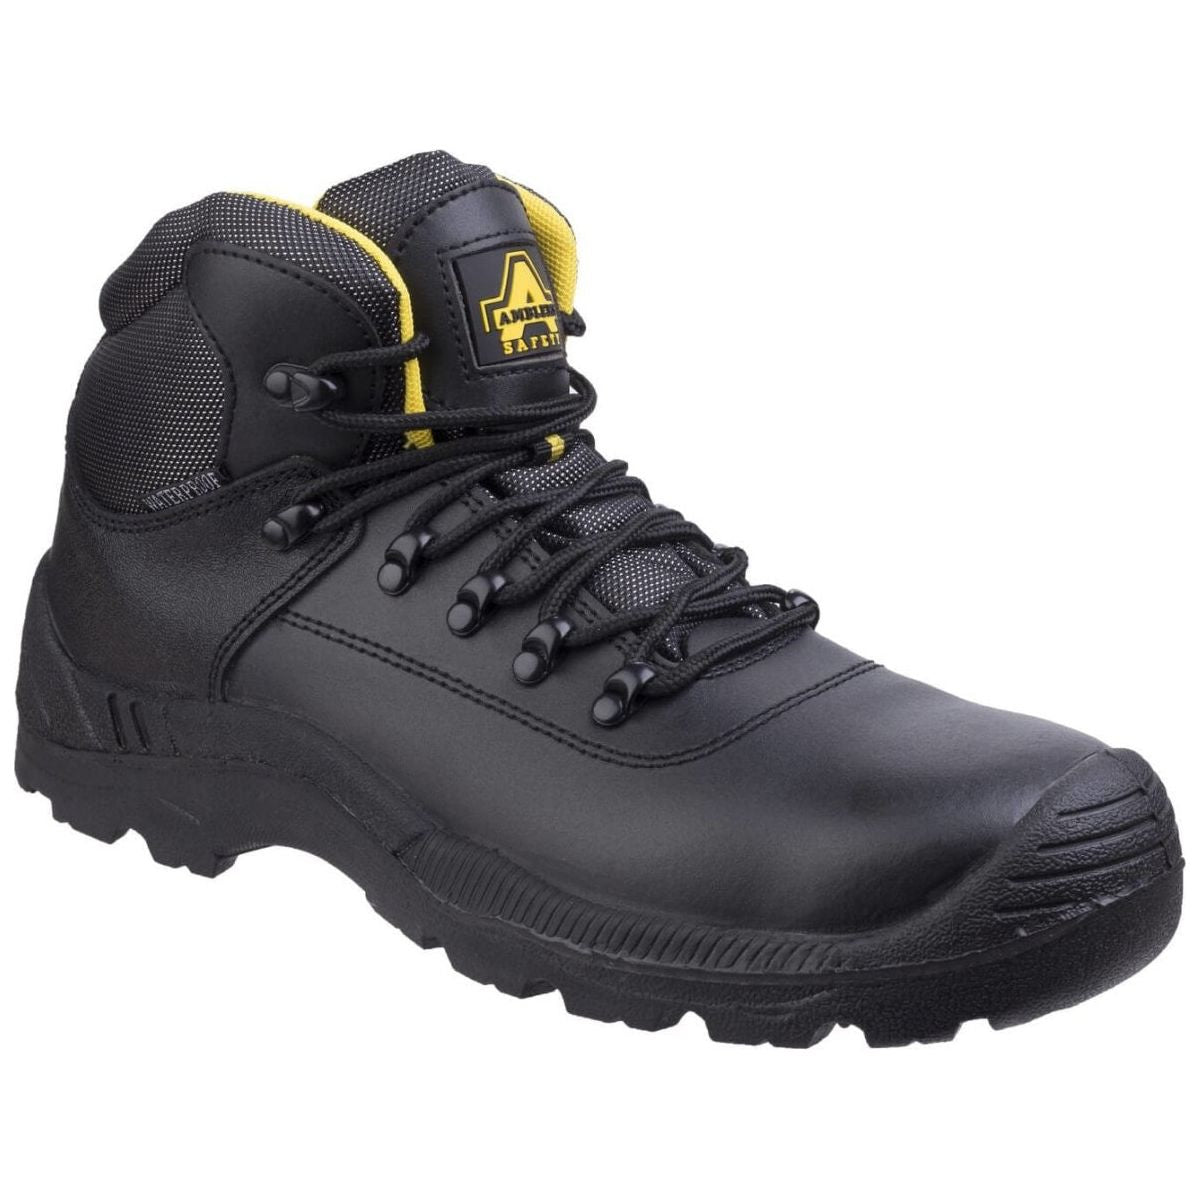 Amblers Fs220 Waterproof Safety Boots Womens - workweargurus.com